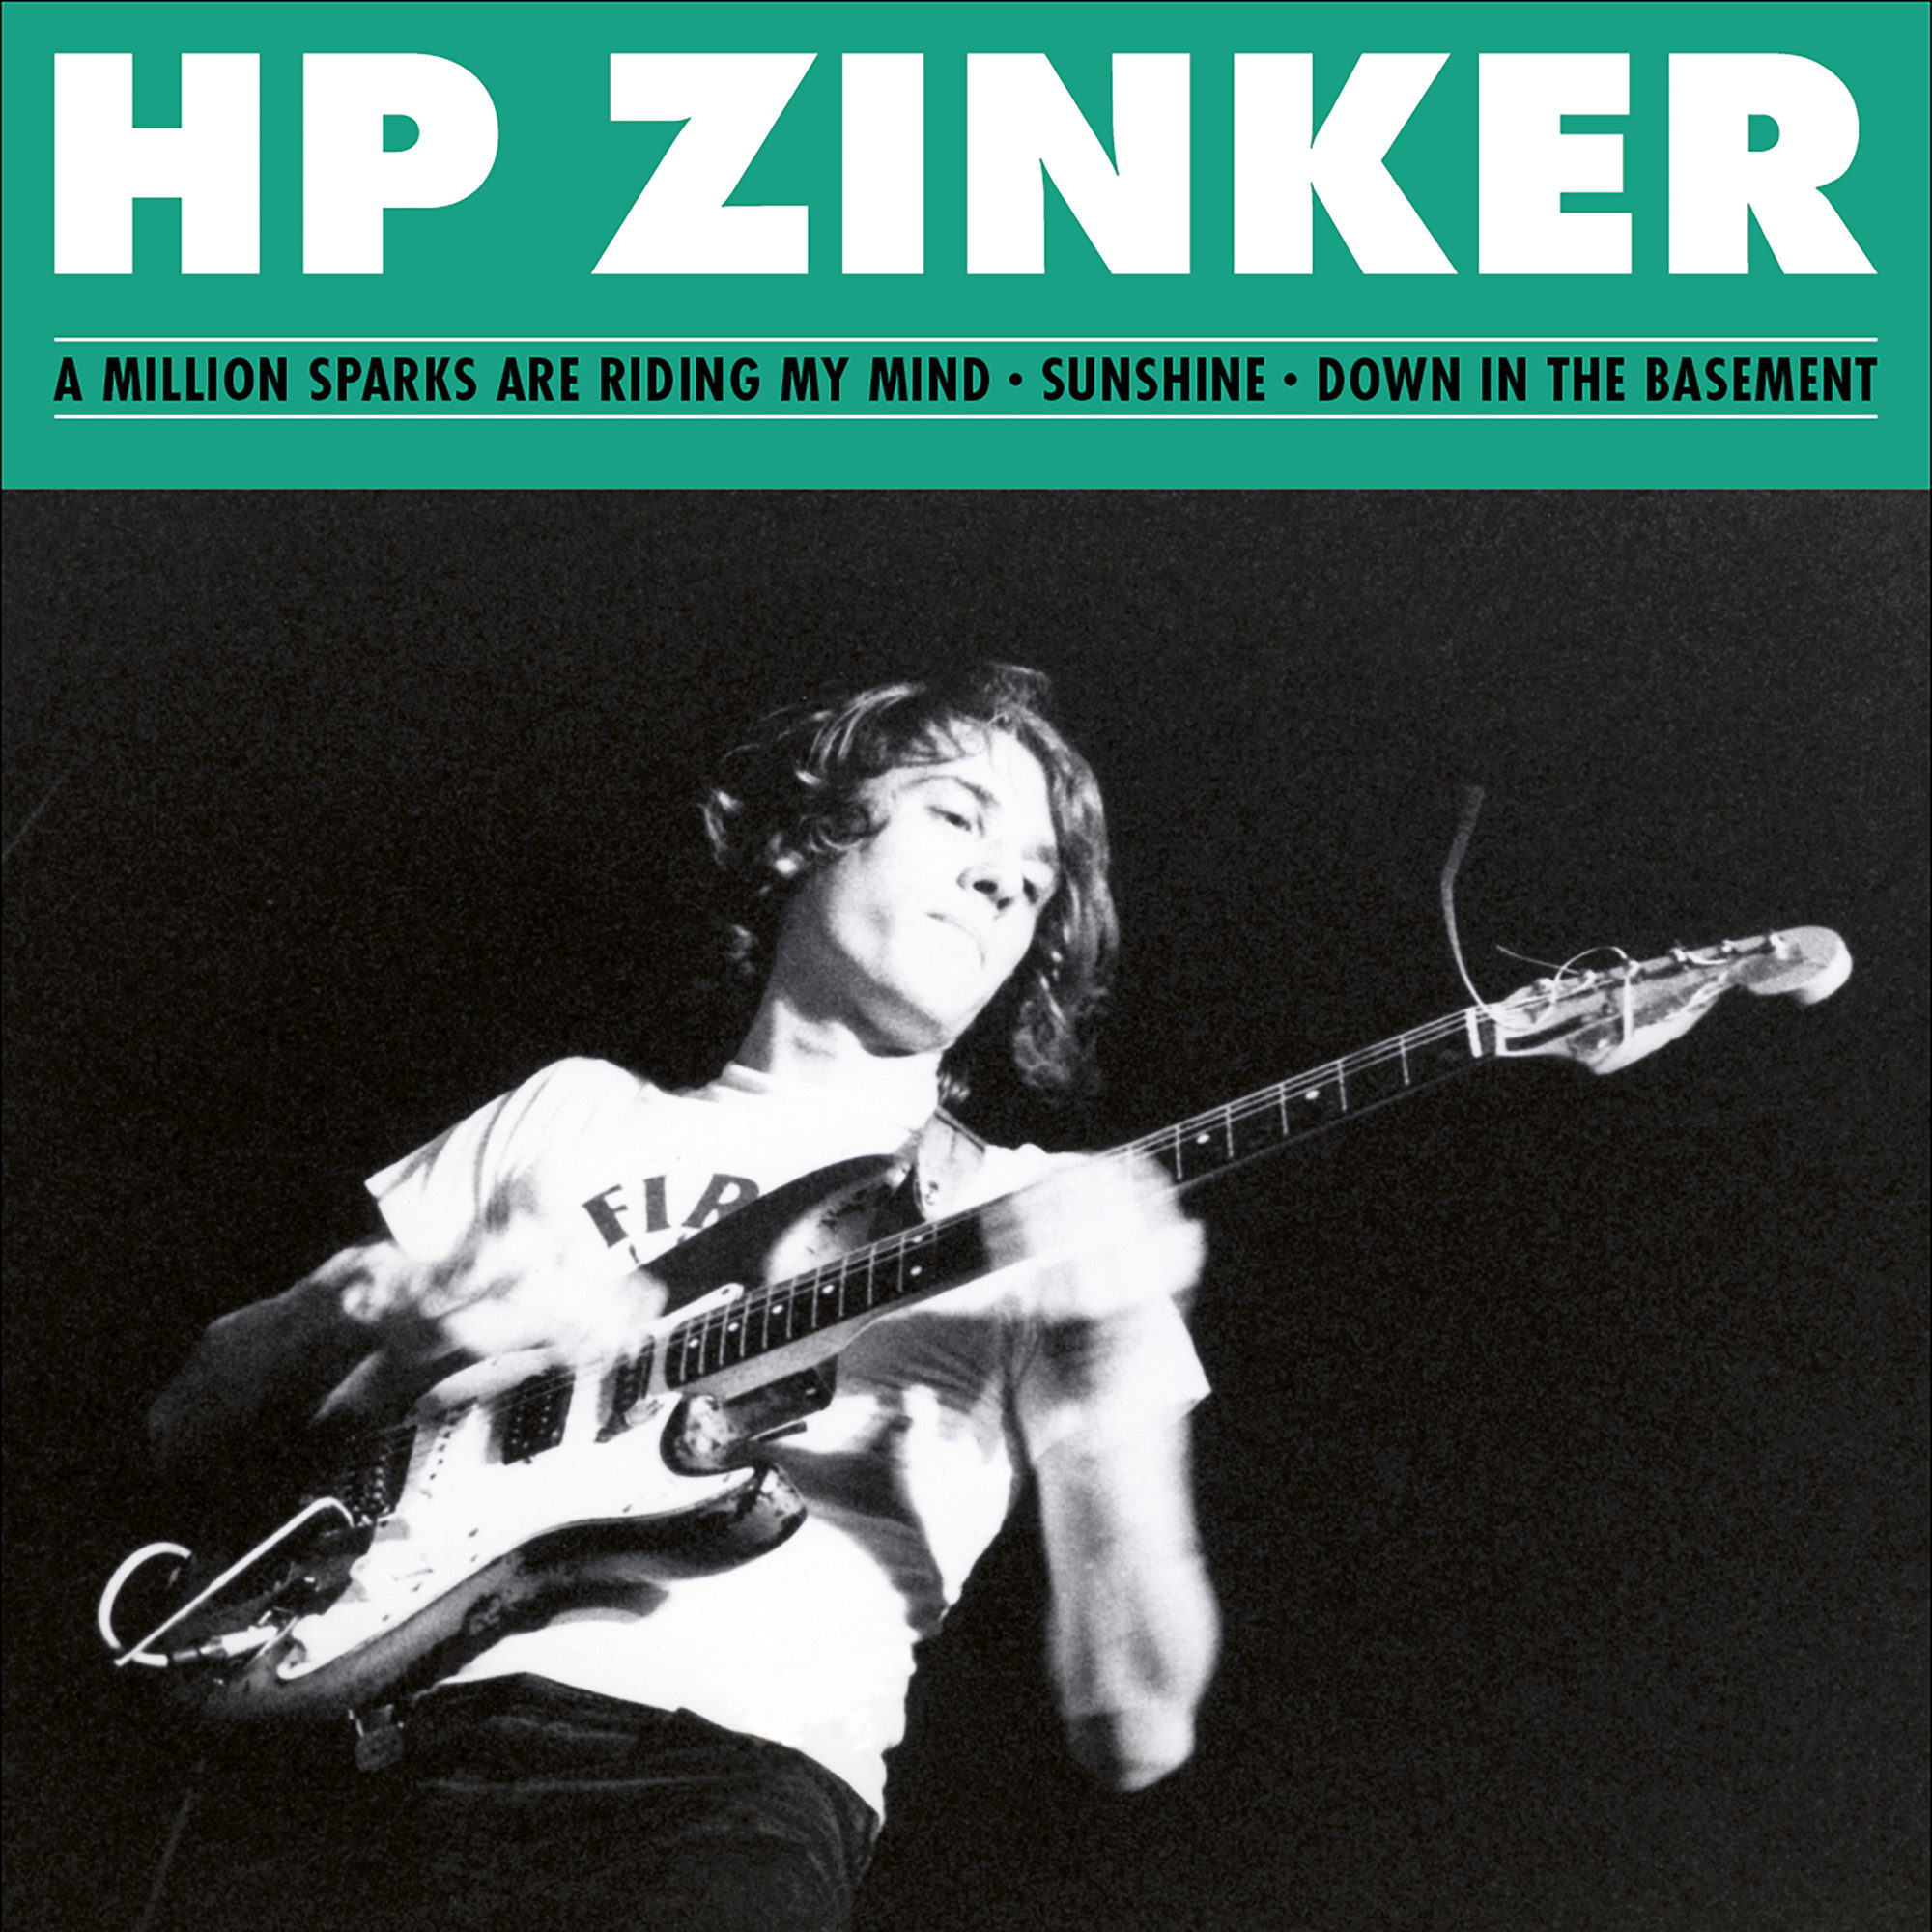 Hp Zinker Band Singlesbox Special Limited Edition Vinyl Austria Platzgumer Artwork